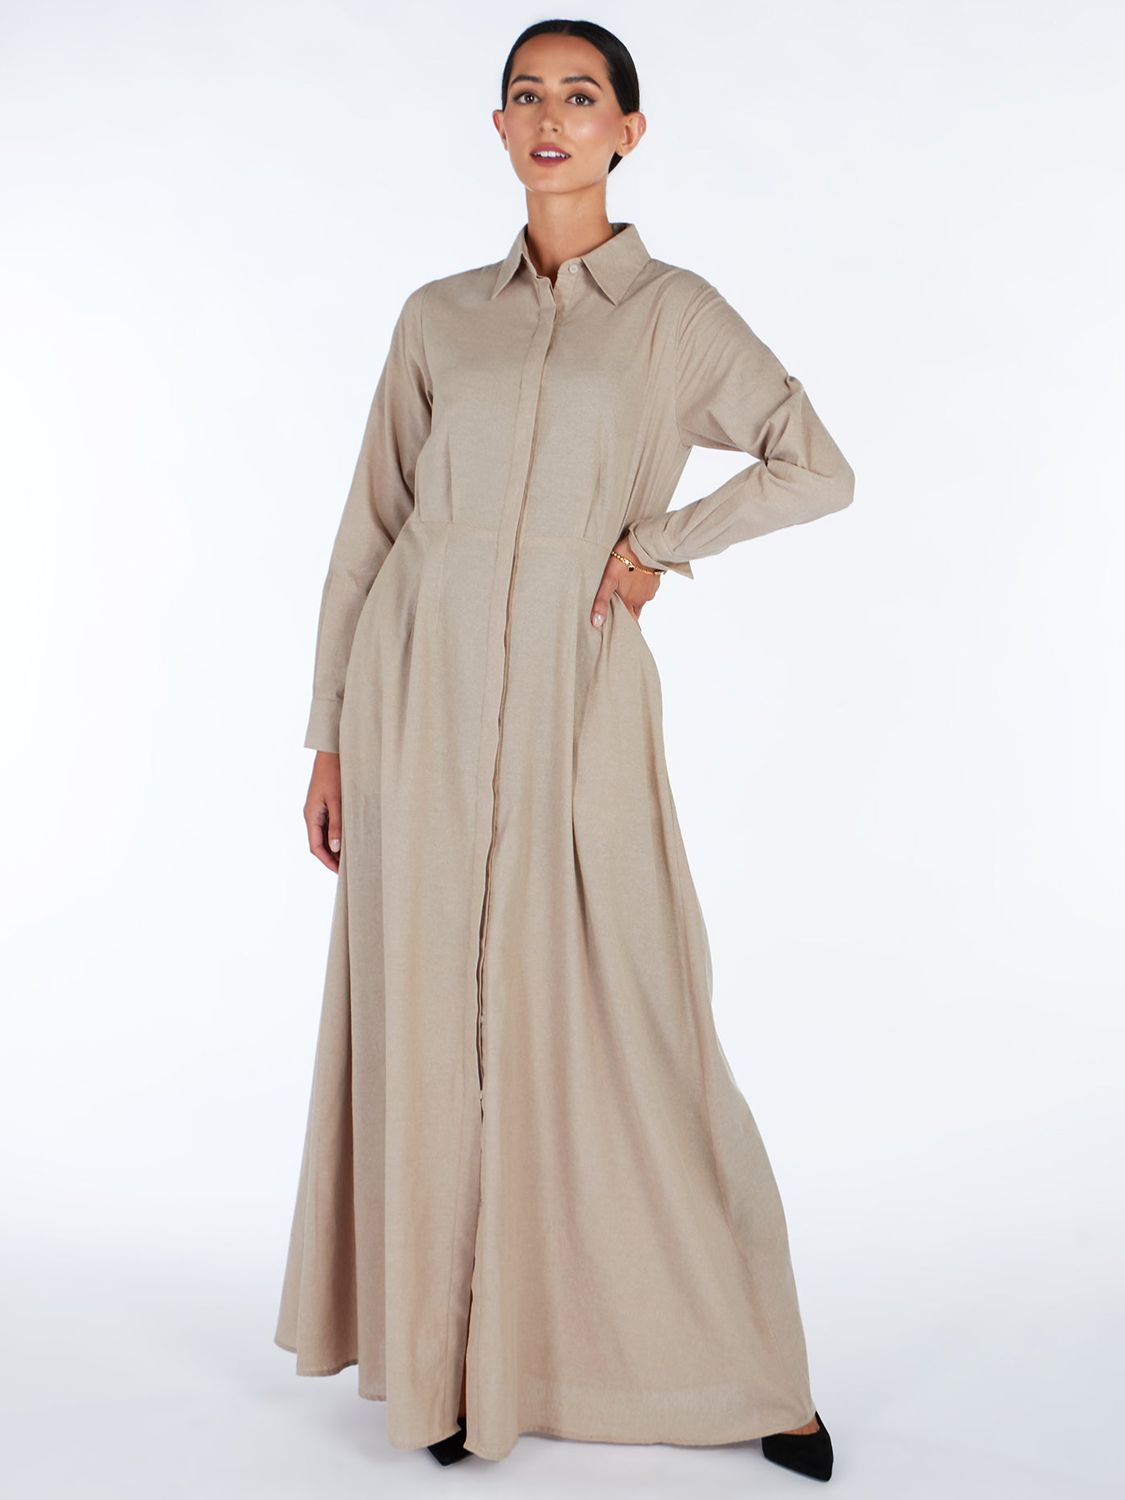 Aab Waist Pleated Cotton Maxi Dress, Beige, S Regular